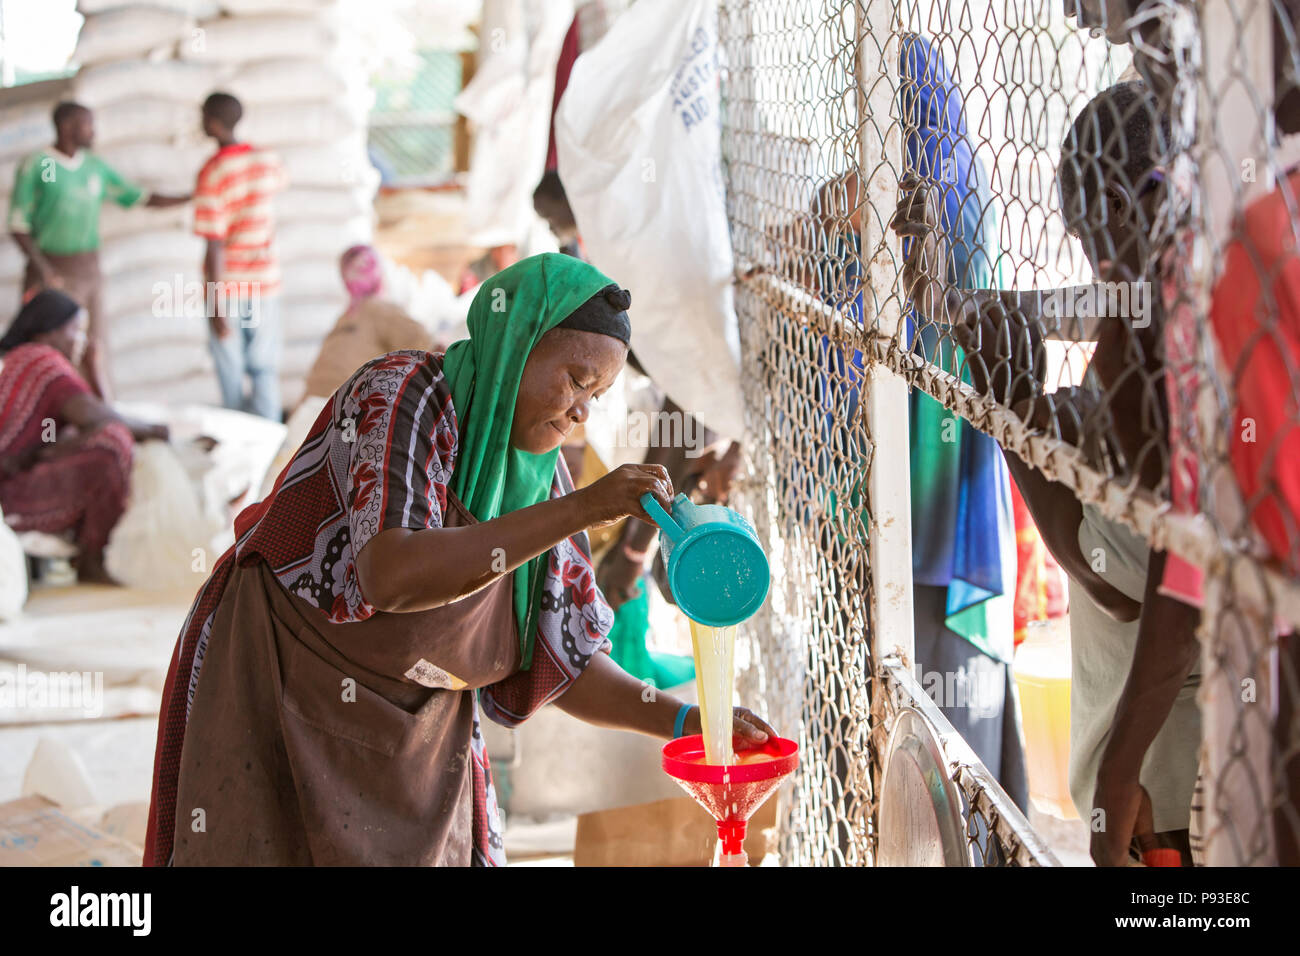 Kakuma, Kenya - Food distribution by the humanitarian aid organization World Food Program in a secure warehouse in the Kakuma refugee camp. Stock Photo